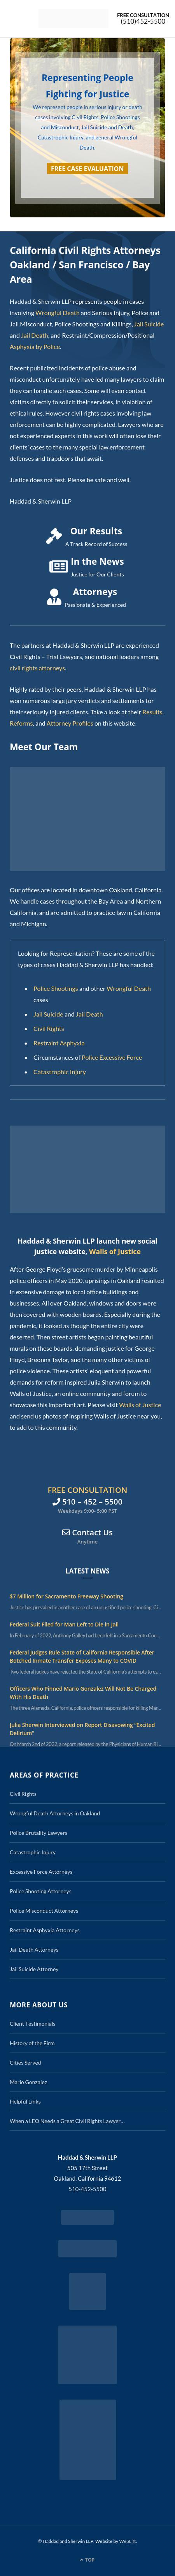 Haddad & Sherwin - Oakland CA Lawyers